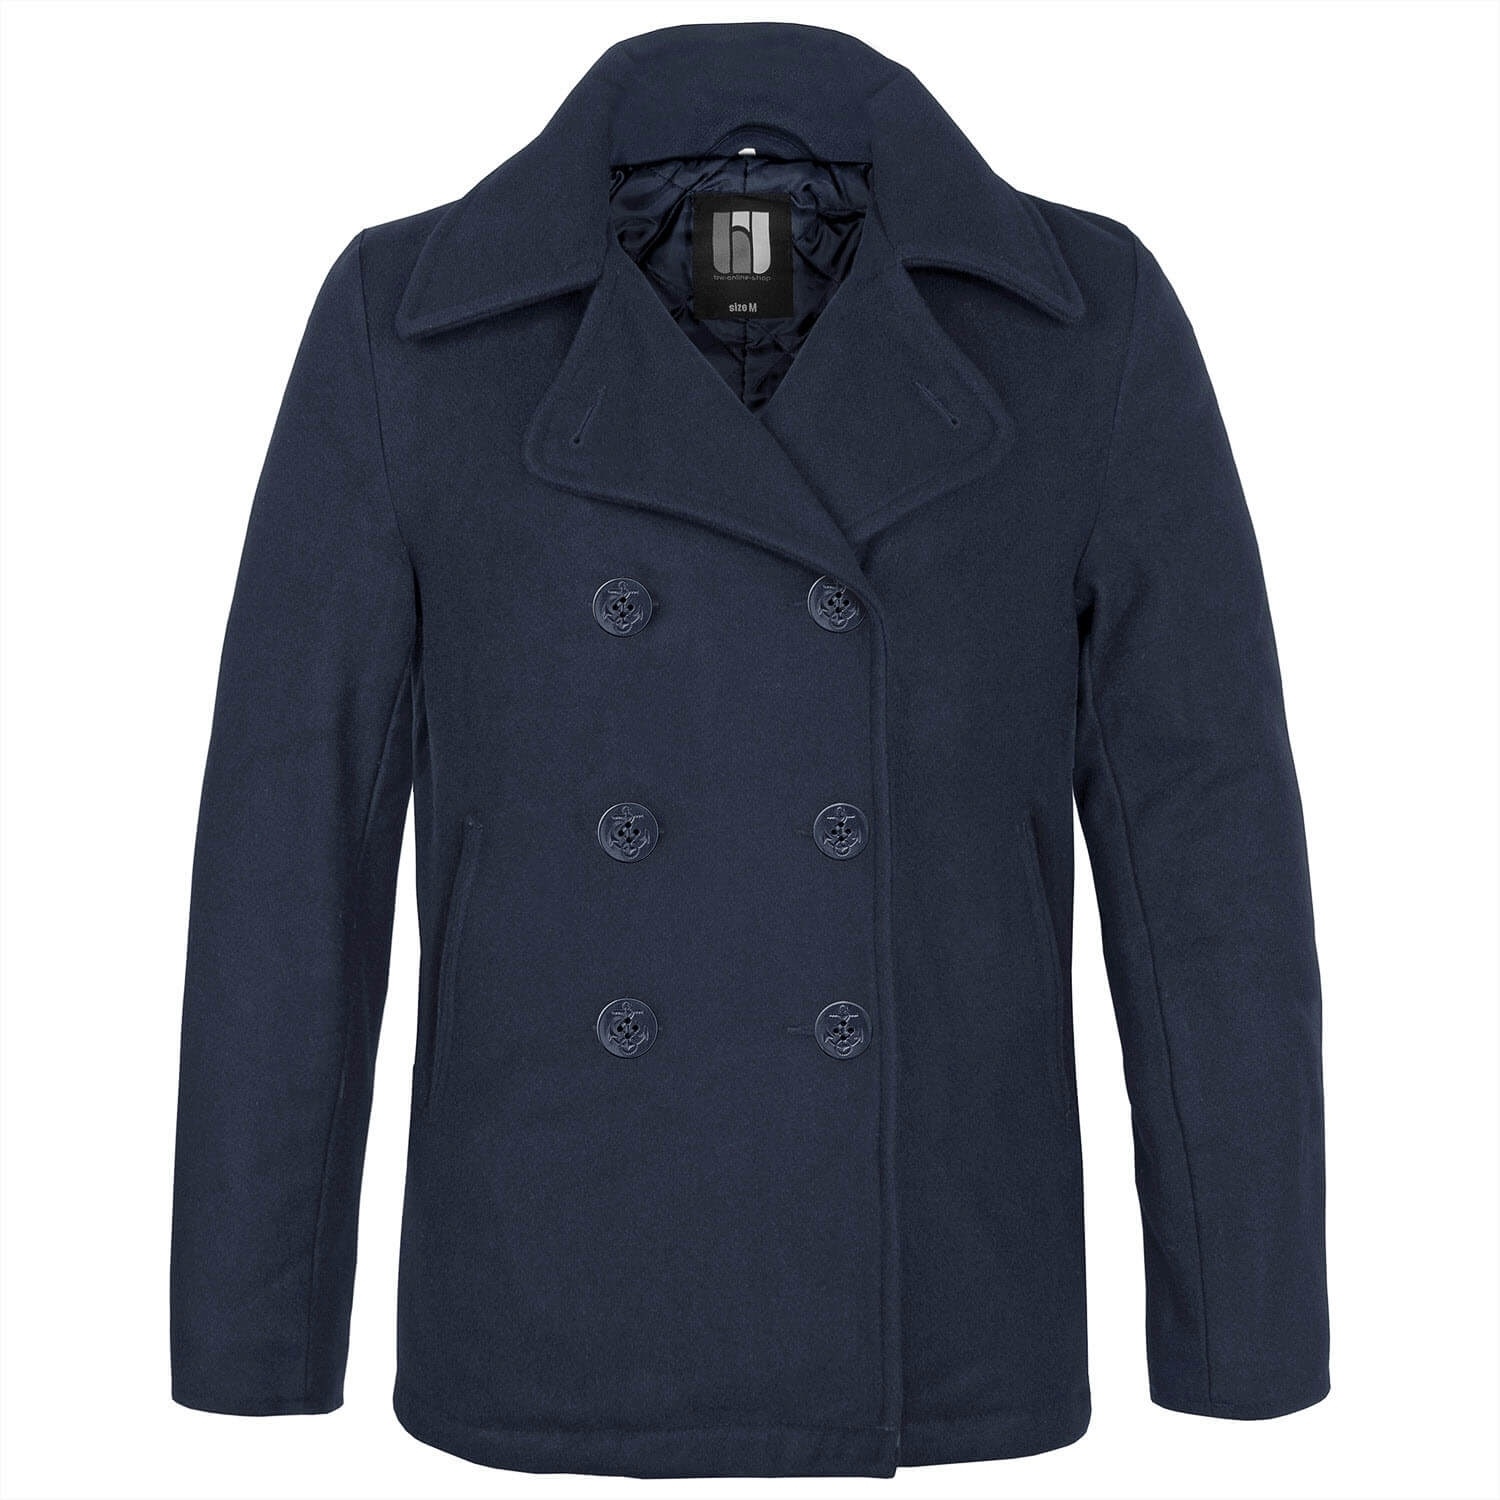 bw-online-shop Navy Pea Coat Mantel blau, Größe 3XL